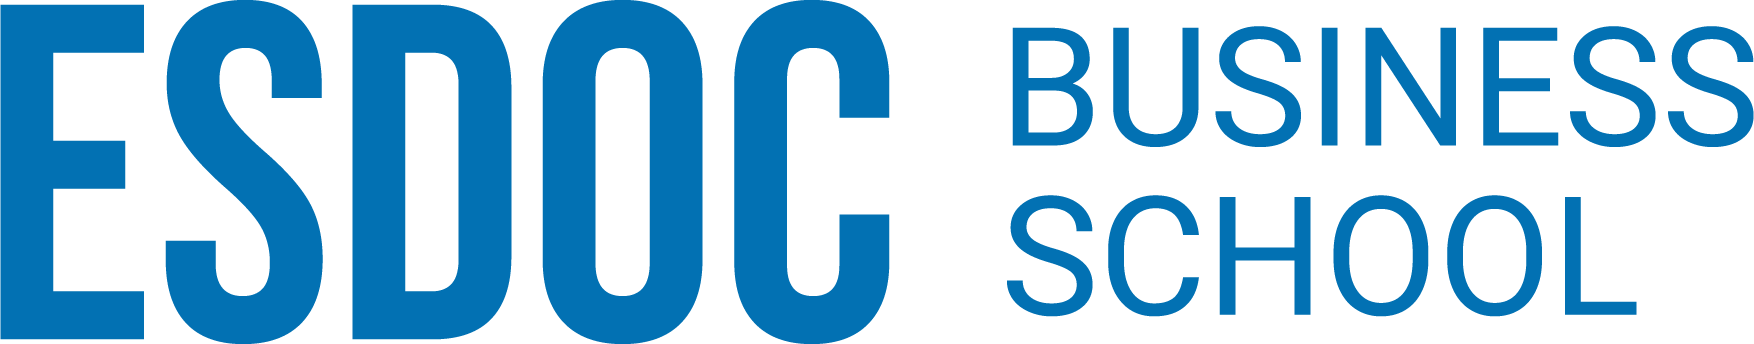 ESDOC Business School